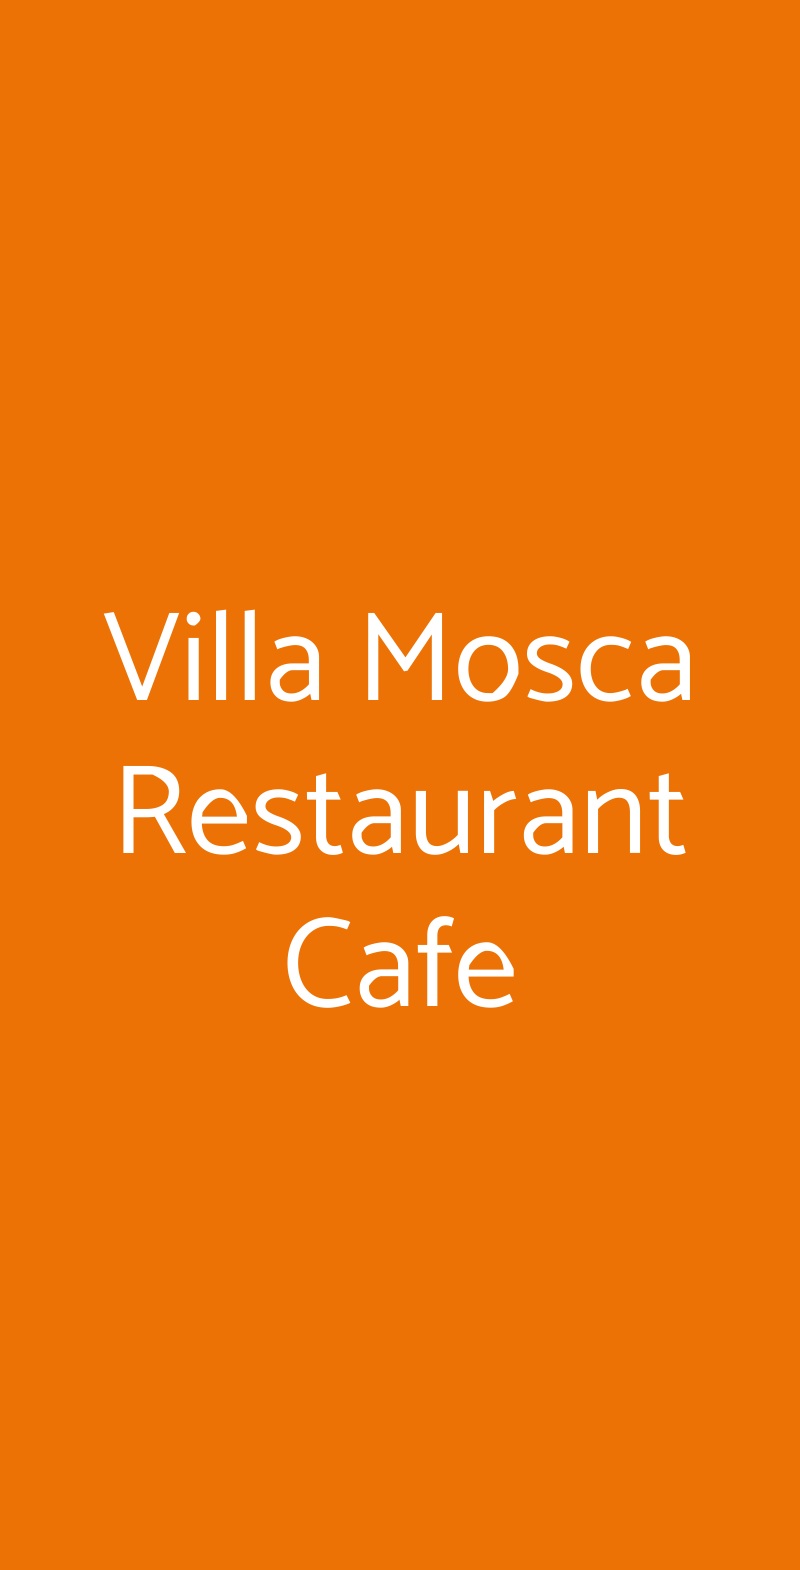 Villa Mosca Restaurant Cafe Alghero menù 1 pagina